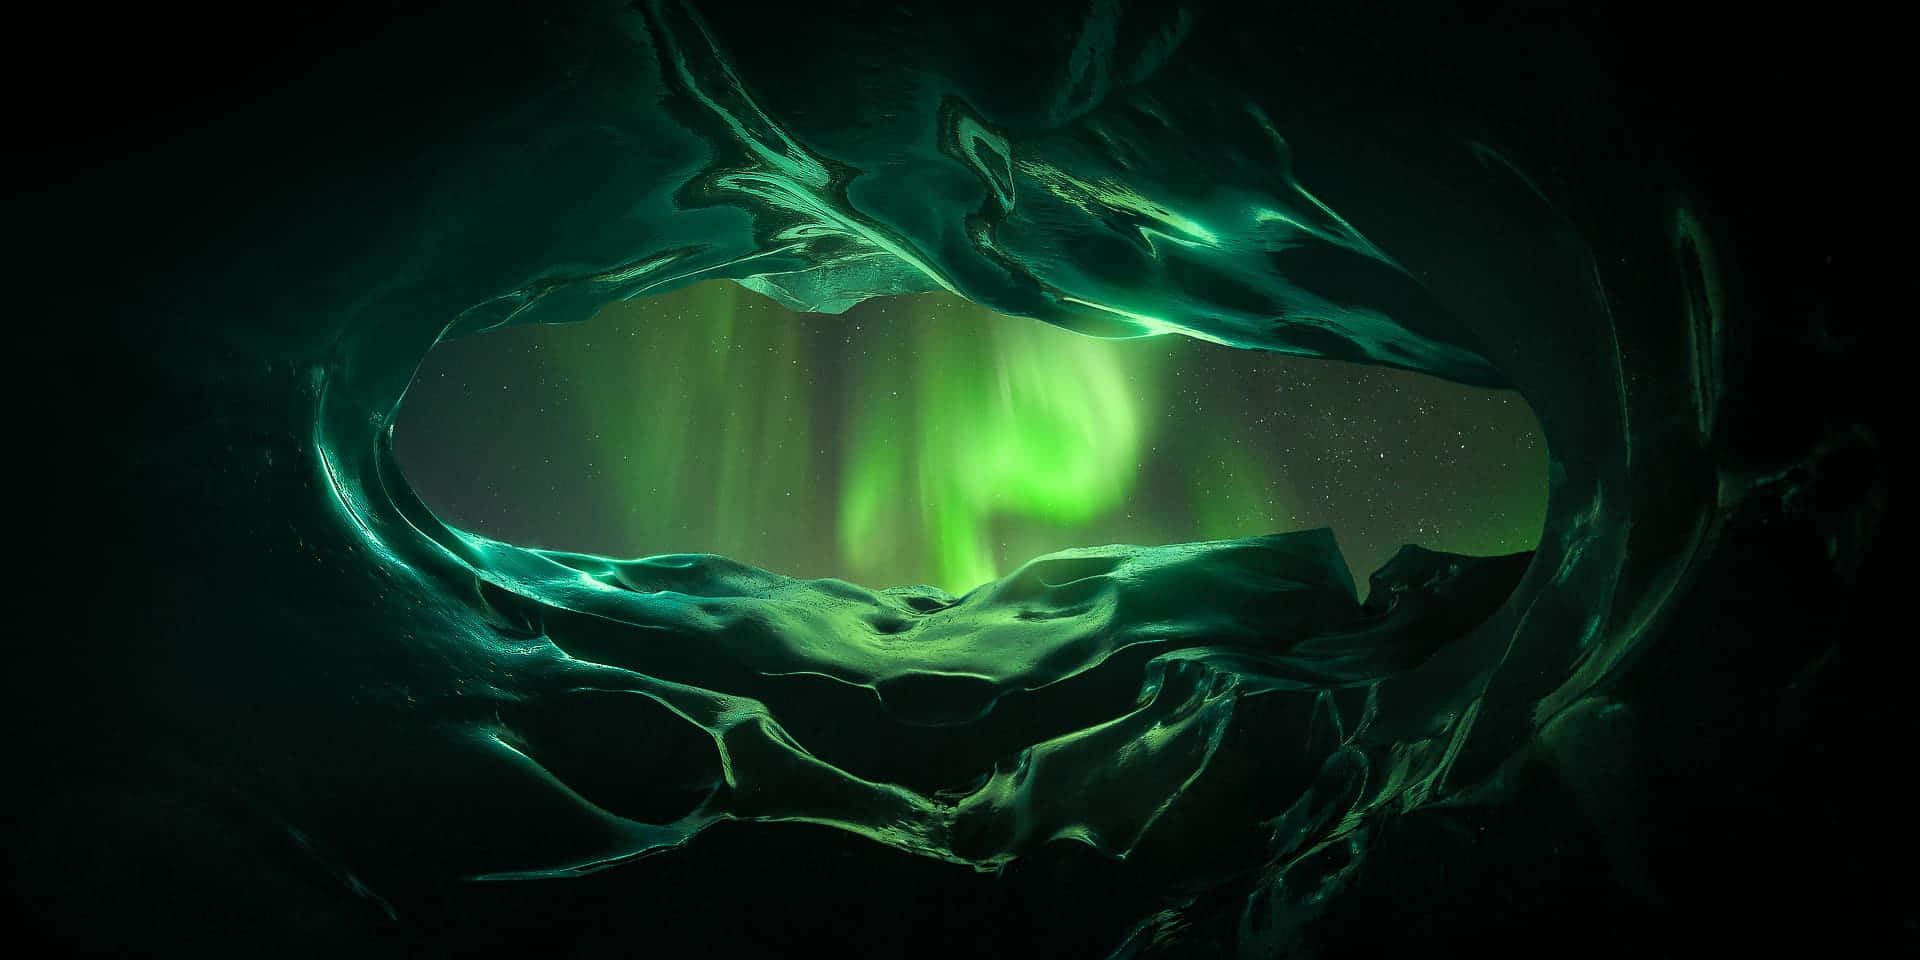 Stunning Aurora Borealis Light Show in the Night Sky Wallpaper